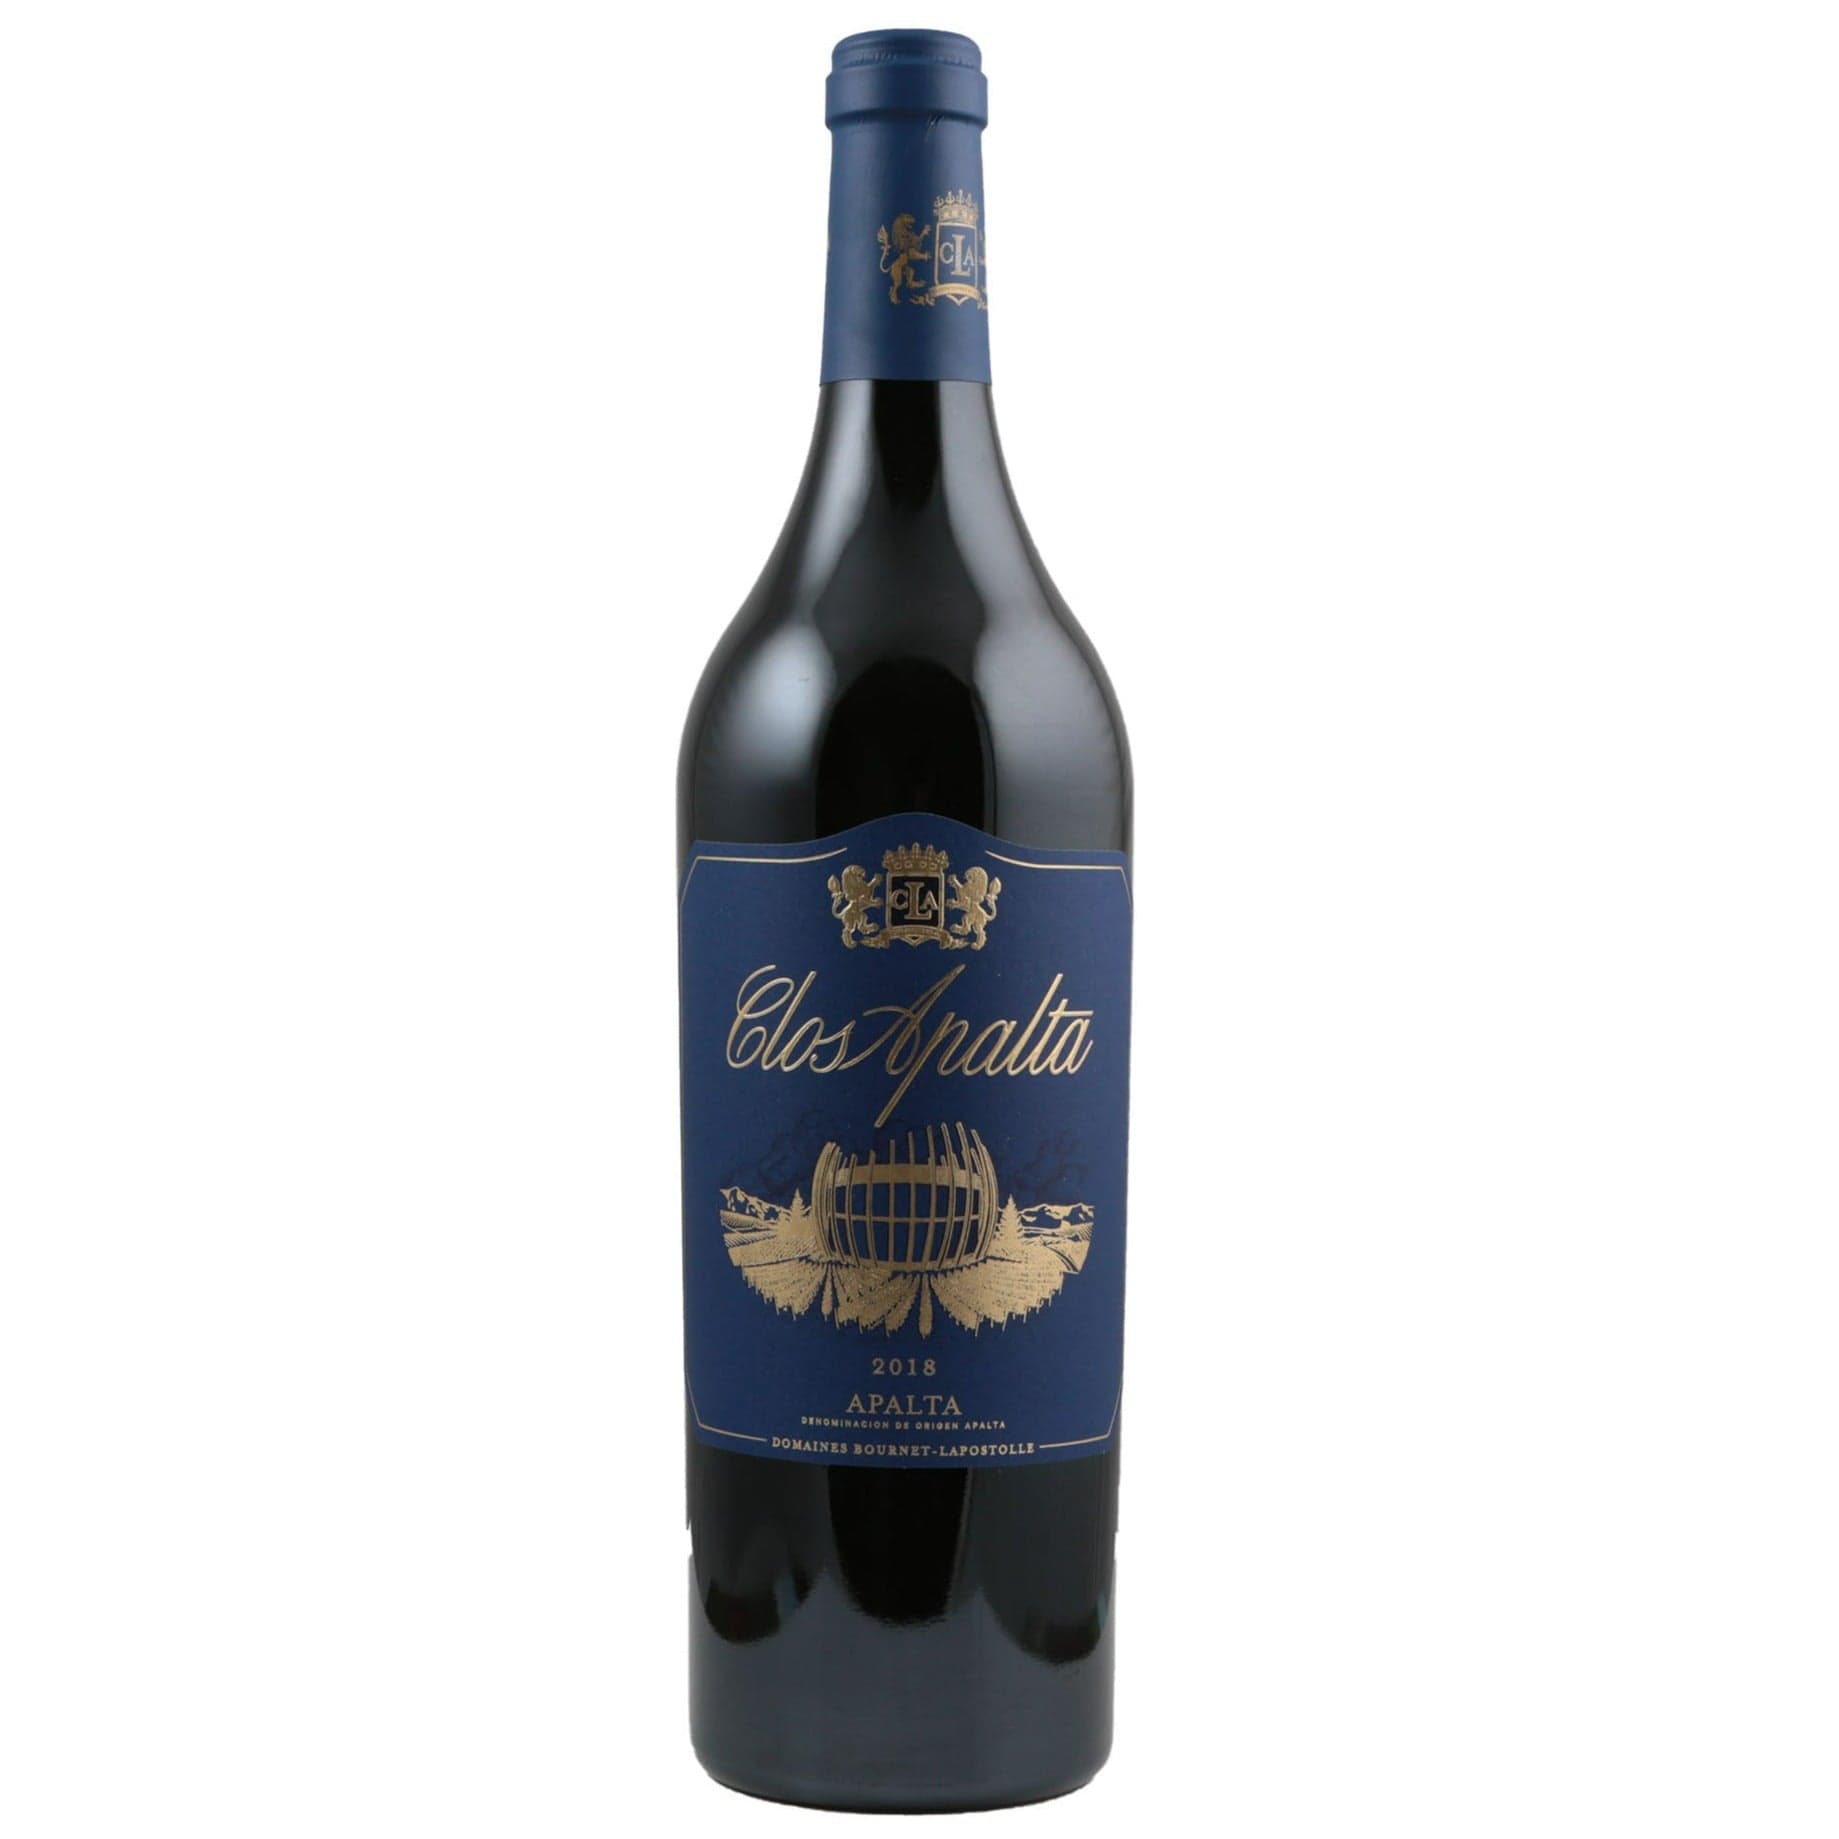 Single bottle of Red wine Clos Apalta, Colchagua Valley, 2018 64% Carmenere, 18% Cab Sauvignon & 18% Merlot